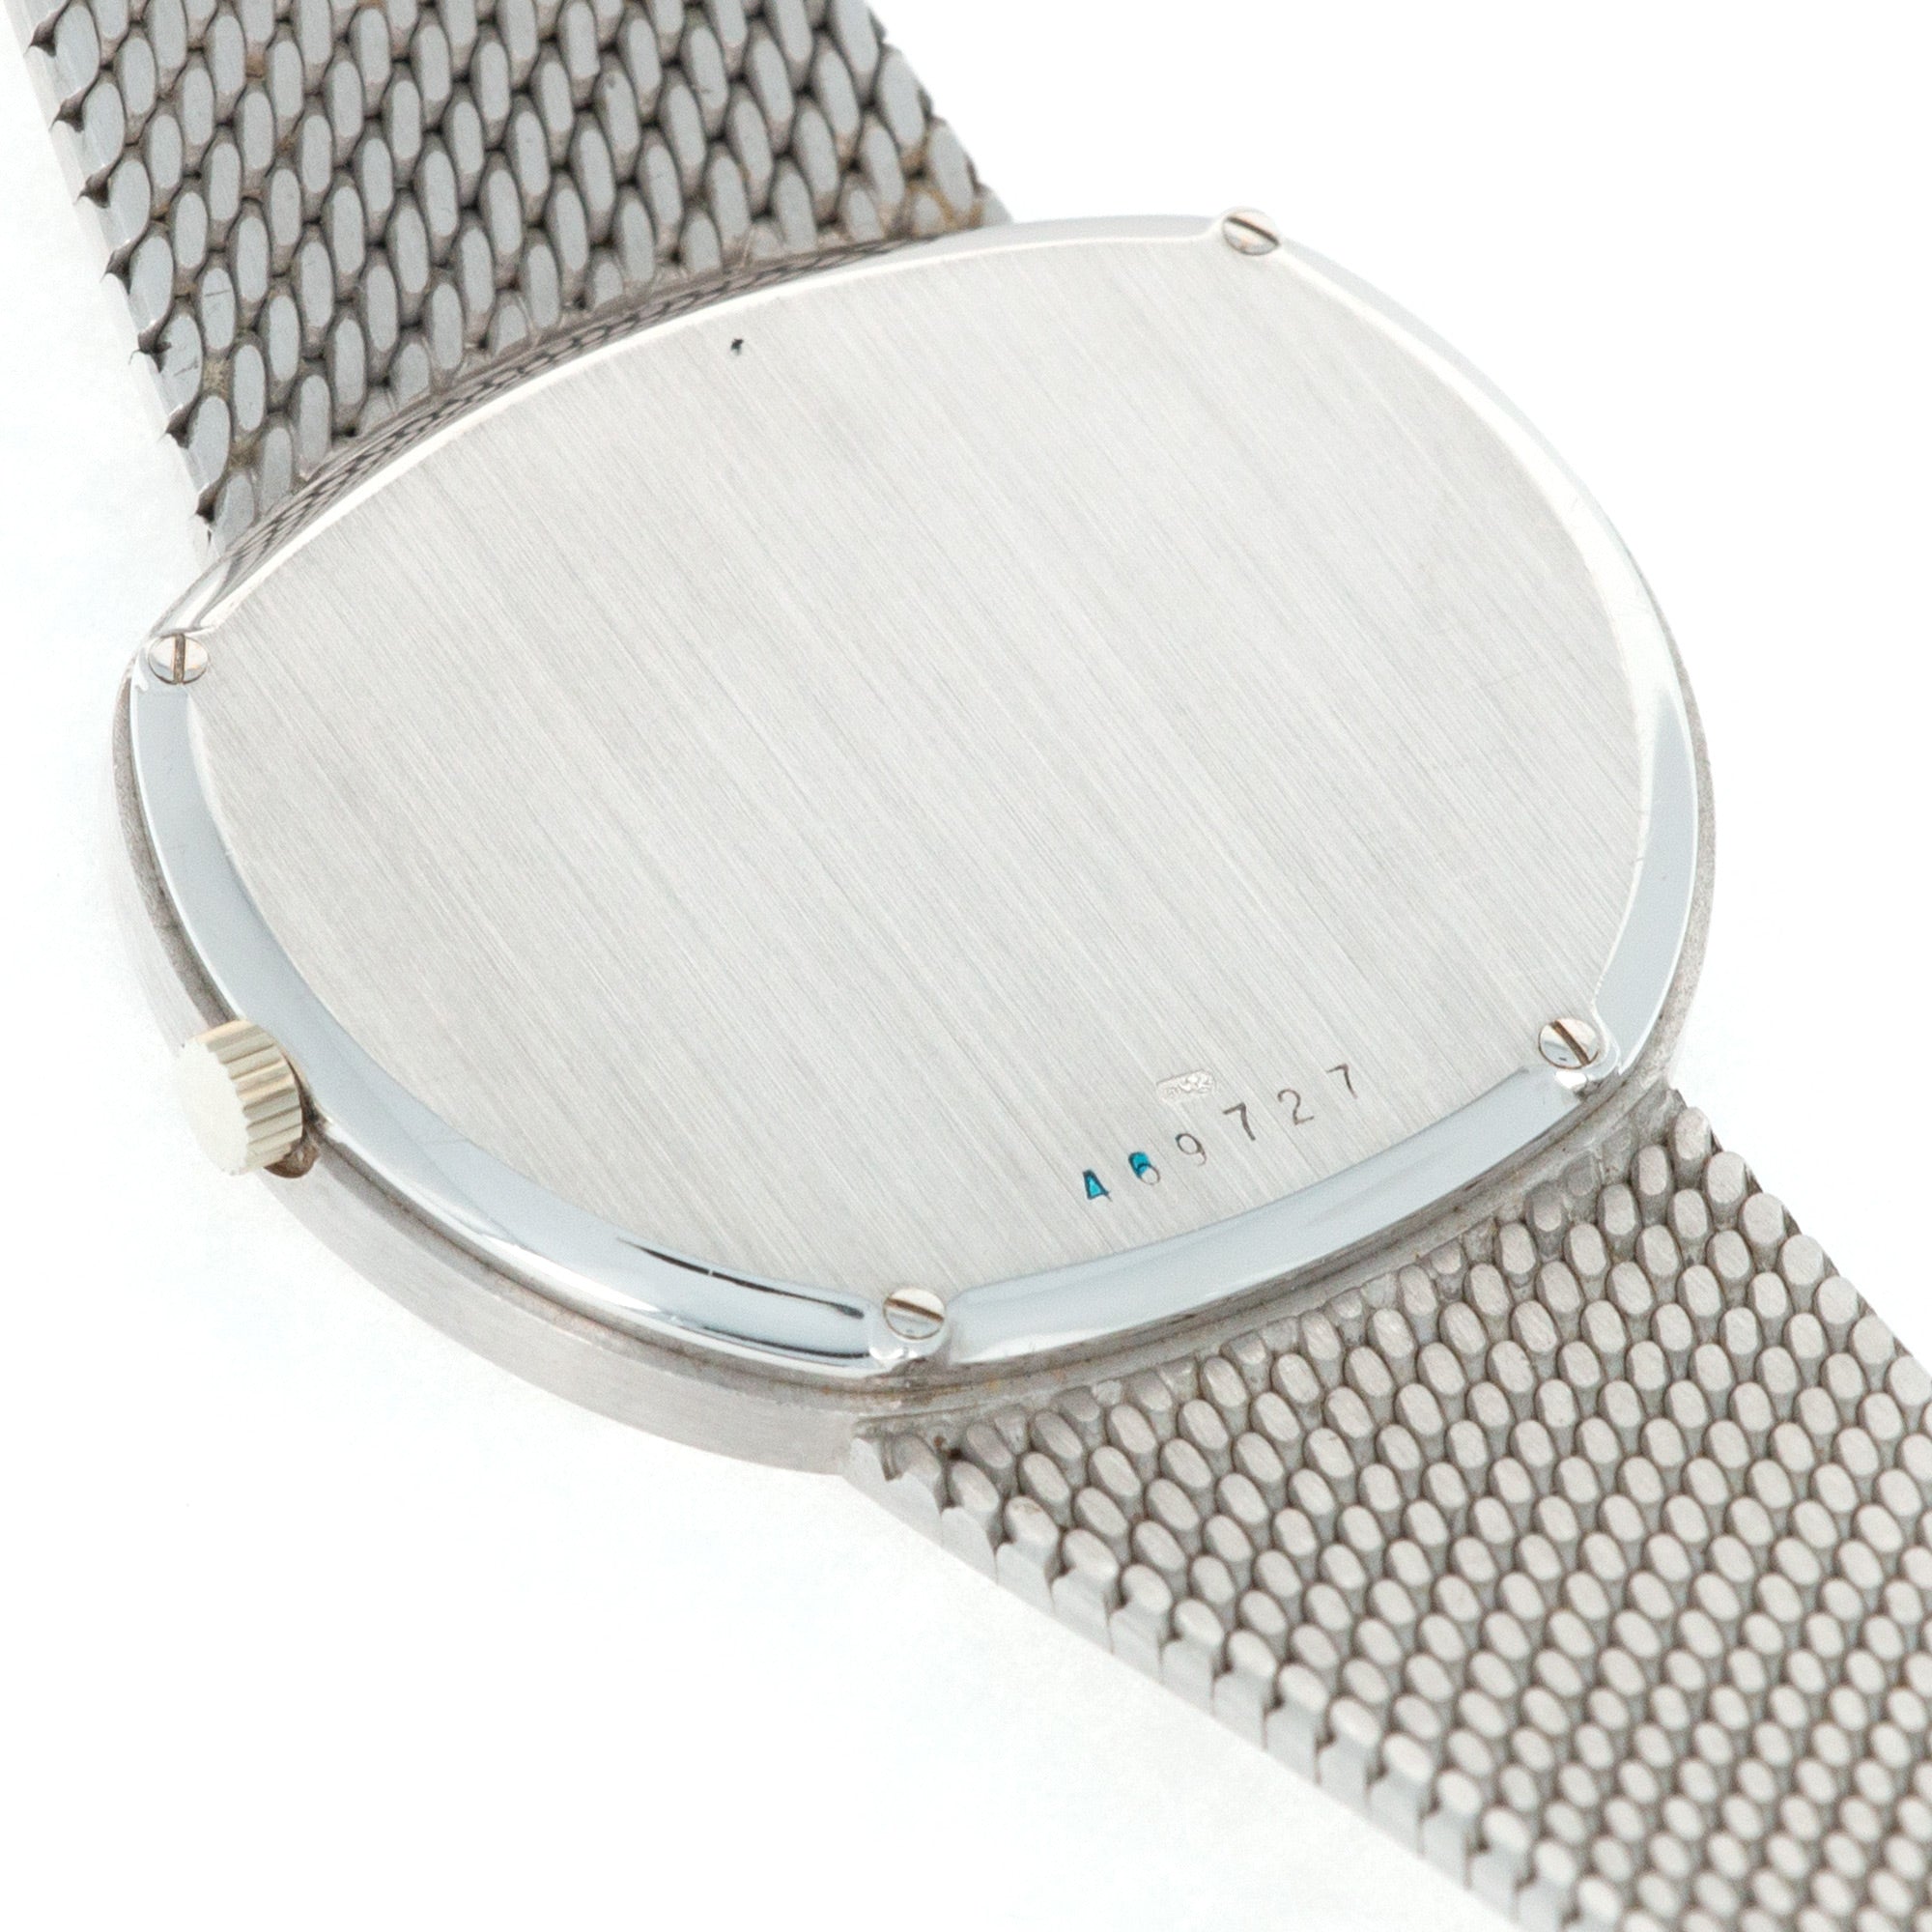 Vacheron Constantin - Vacheron Constantin White Gold Lapis Dial Watch, 1970s - The Keystone Watches